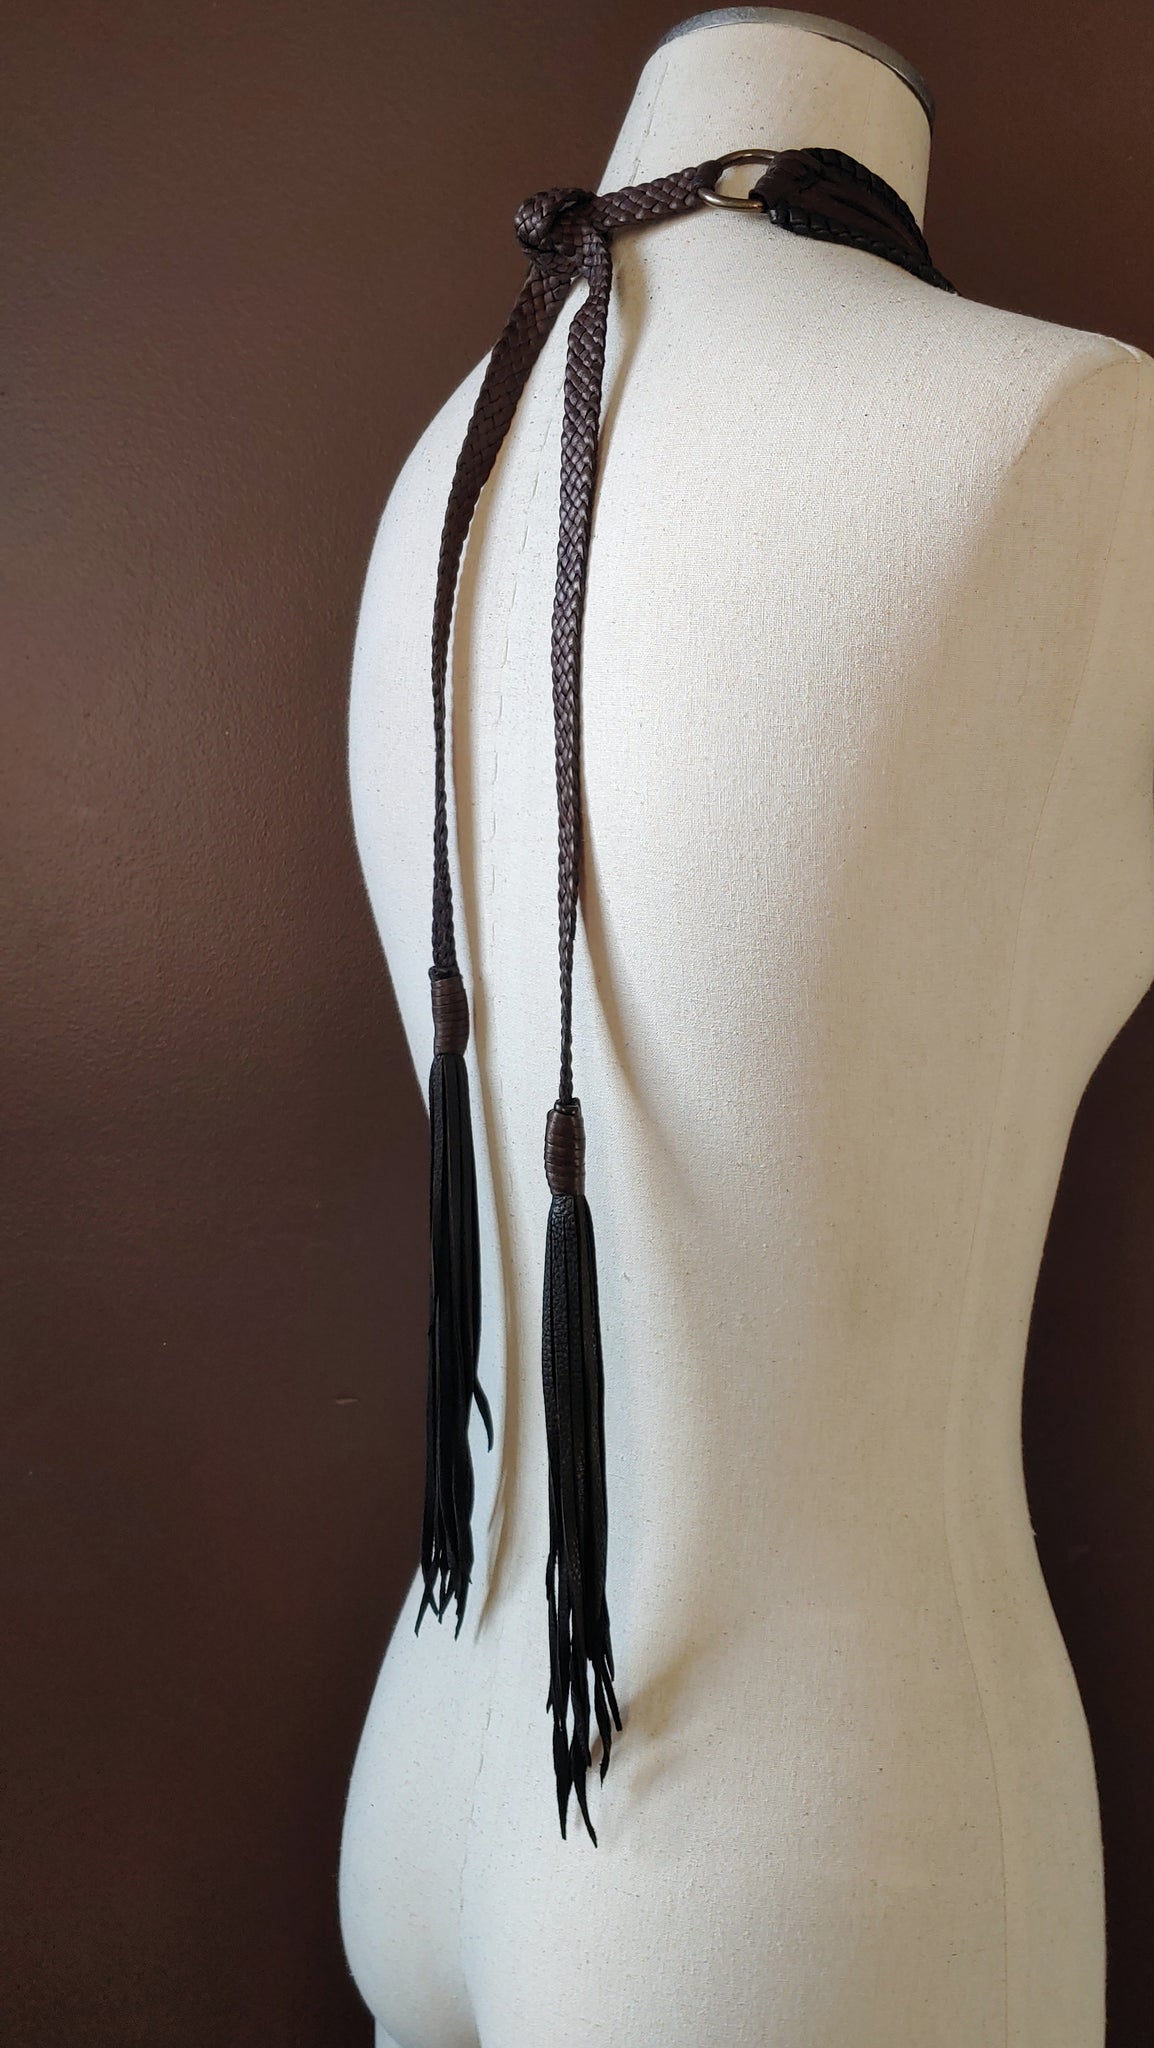 Kai Leather Necklace, Basket Weave Pendant, Crinkled Collar, Fringe, African Inspired